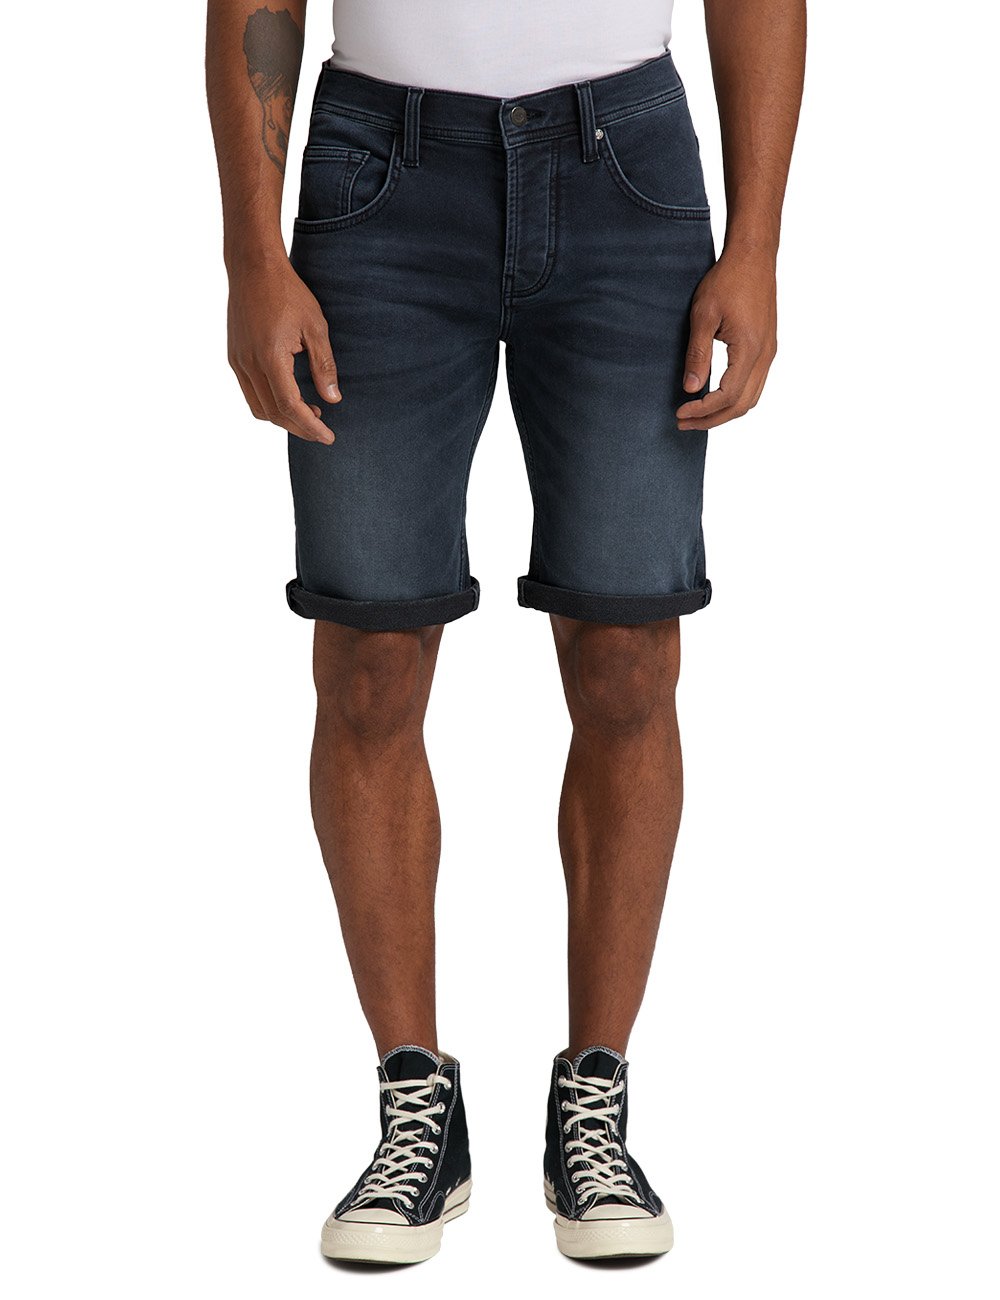 Jeans Shorts - aktuelle Modetrends jetzt online shoppen